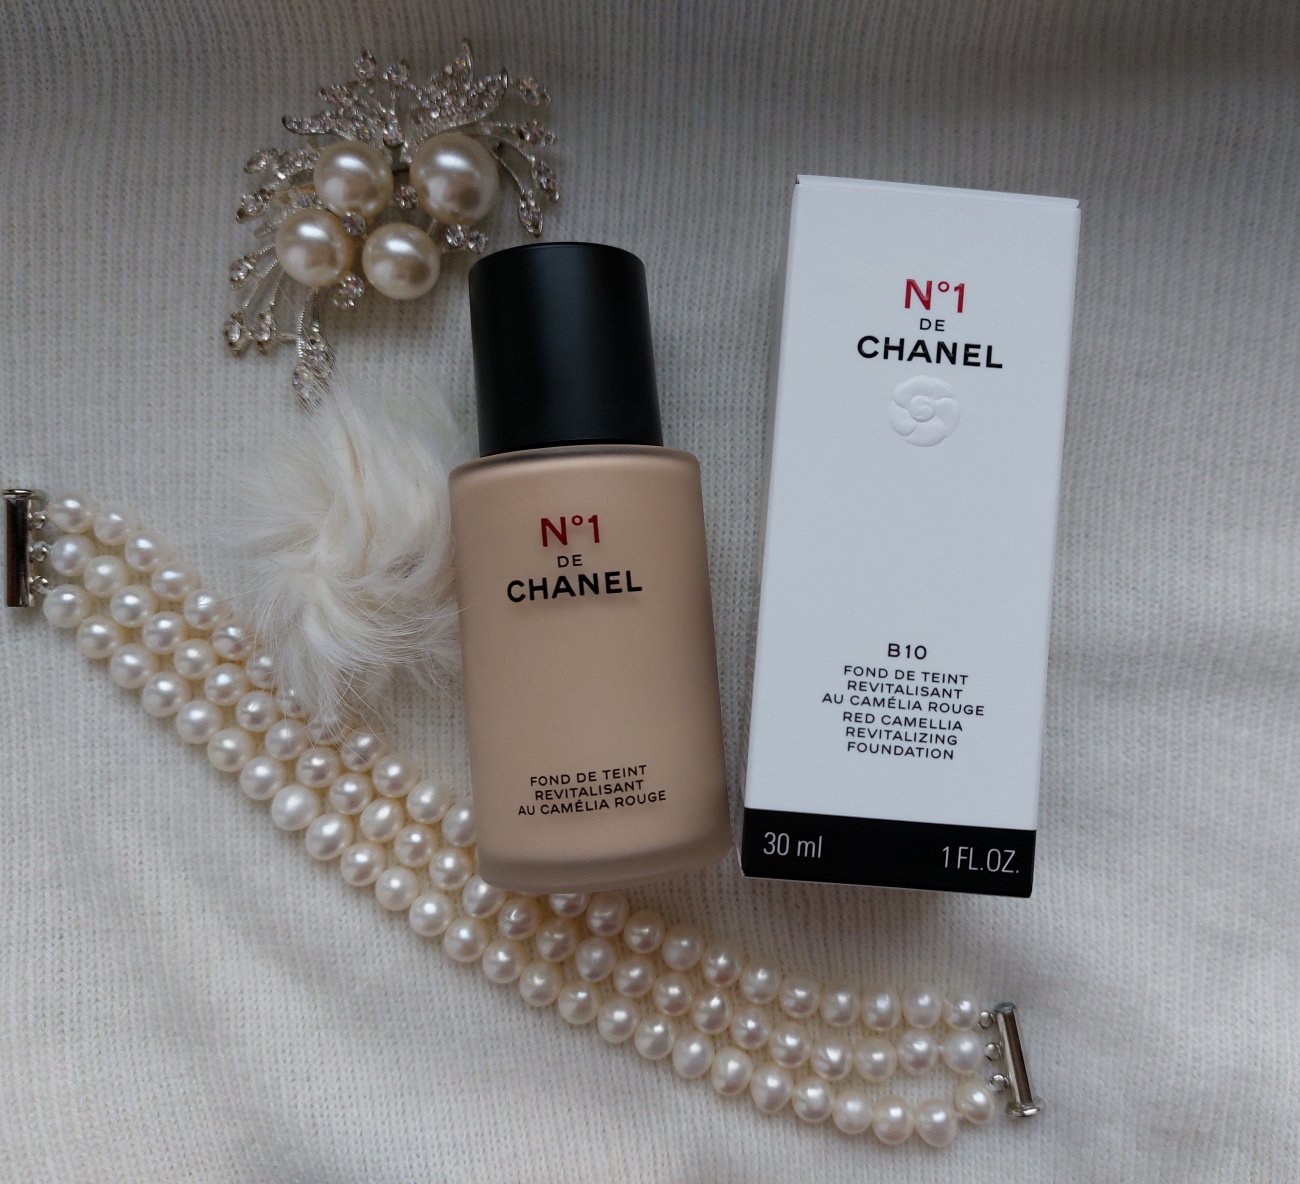 Chanel N.1 De Chanel Red Camellia Revitalizing Foundation # B10